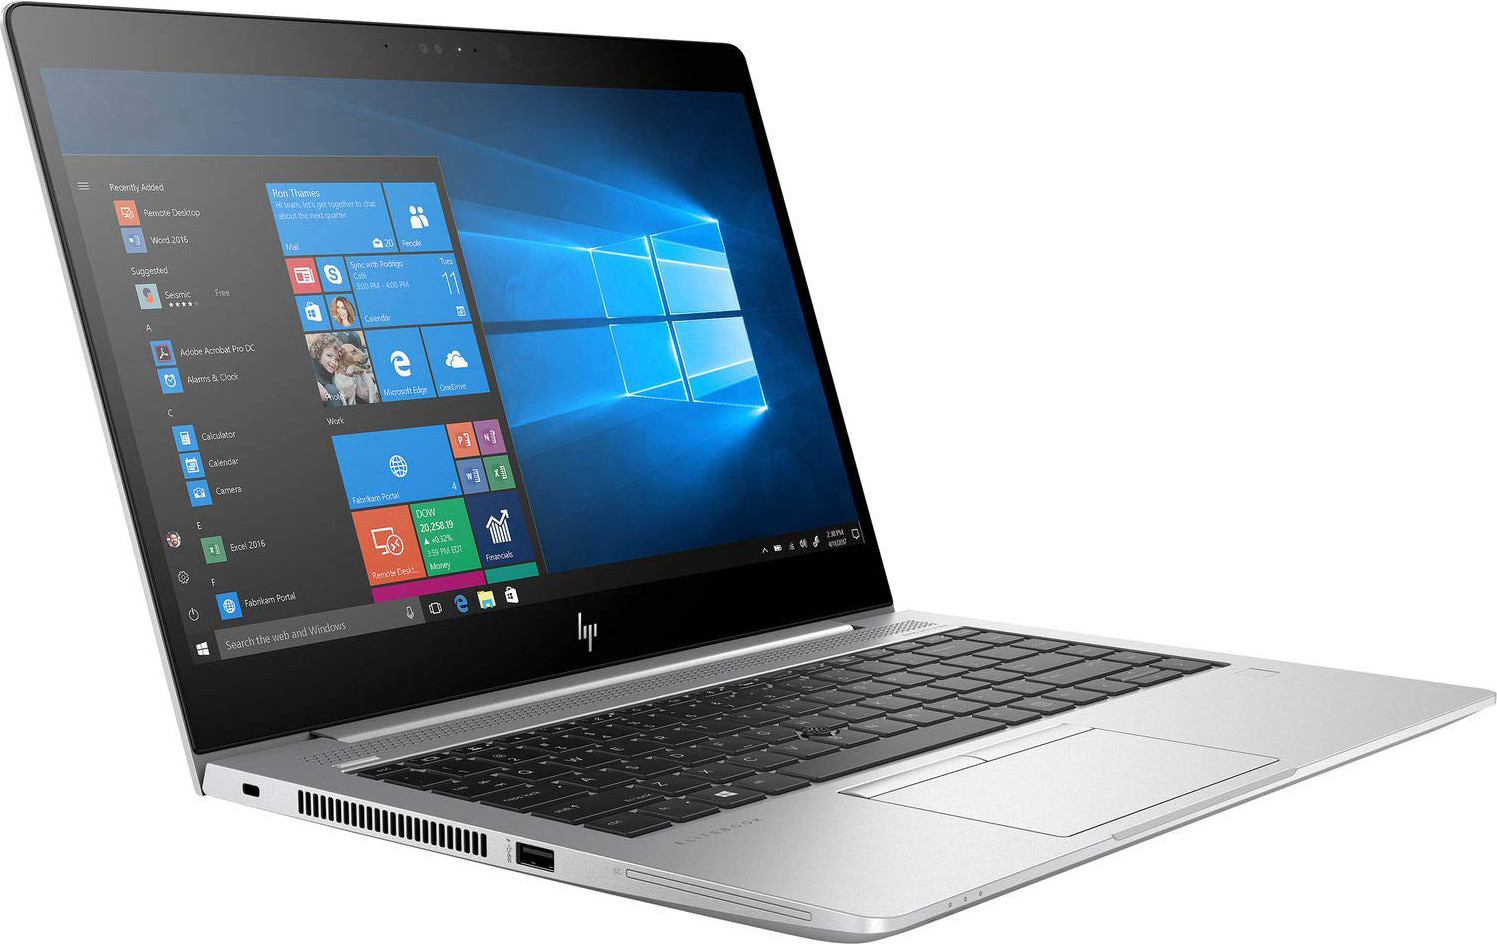 2019 HP Elitebook 840 G5 14" Privacy Screen FHD Business Laptop (Intel Core i7-7500U, 16GB DDR4, 512GB PCIe NVMe M.2 SSD) Fingerprint, Backlit, NFC, Thunderbolt, B&O Audio, HDMI, Windows 10 Pro